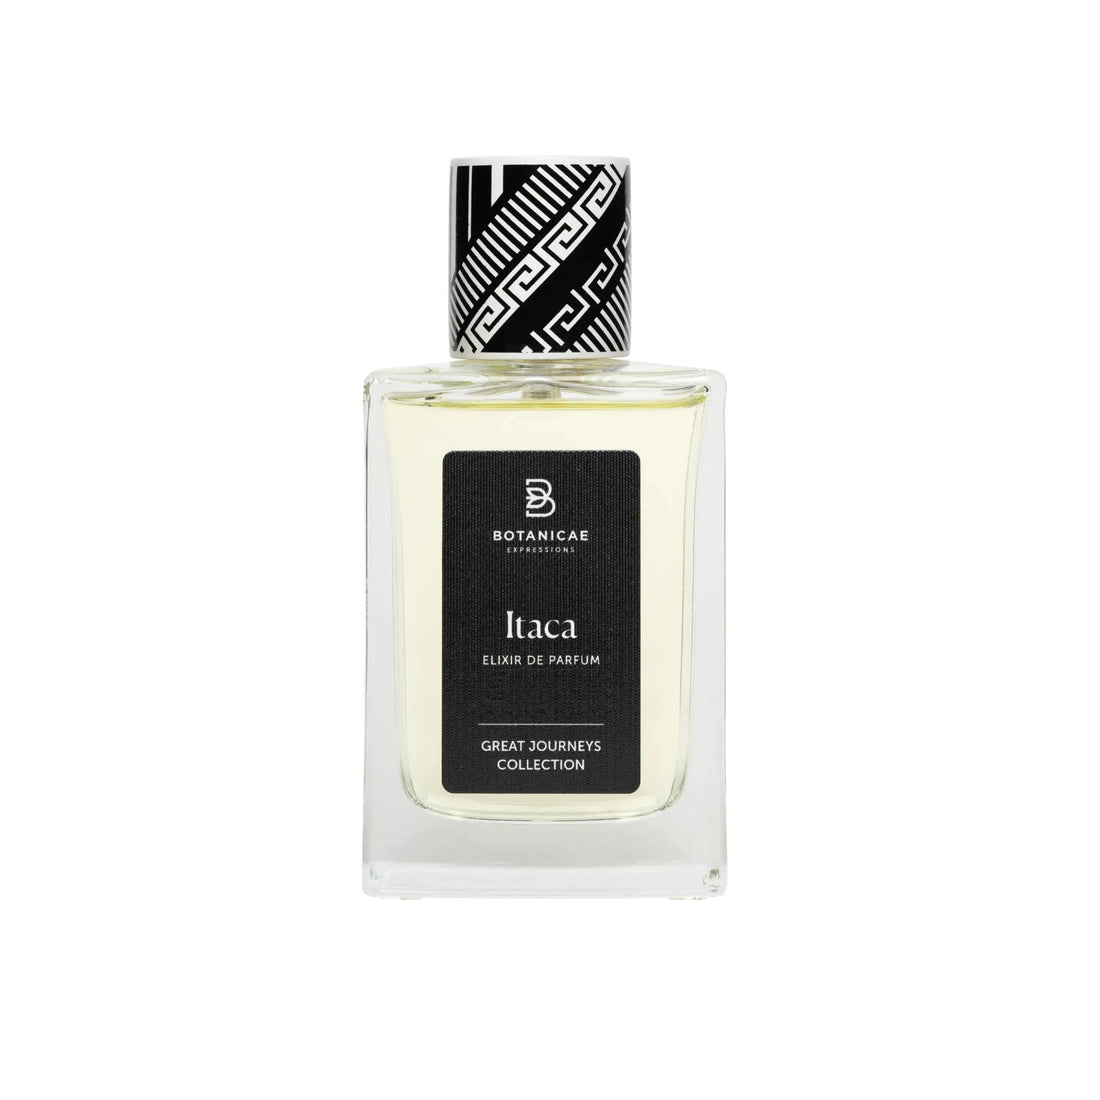 Itaca Elixir de Parfum Botanicae - 75 ml